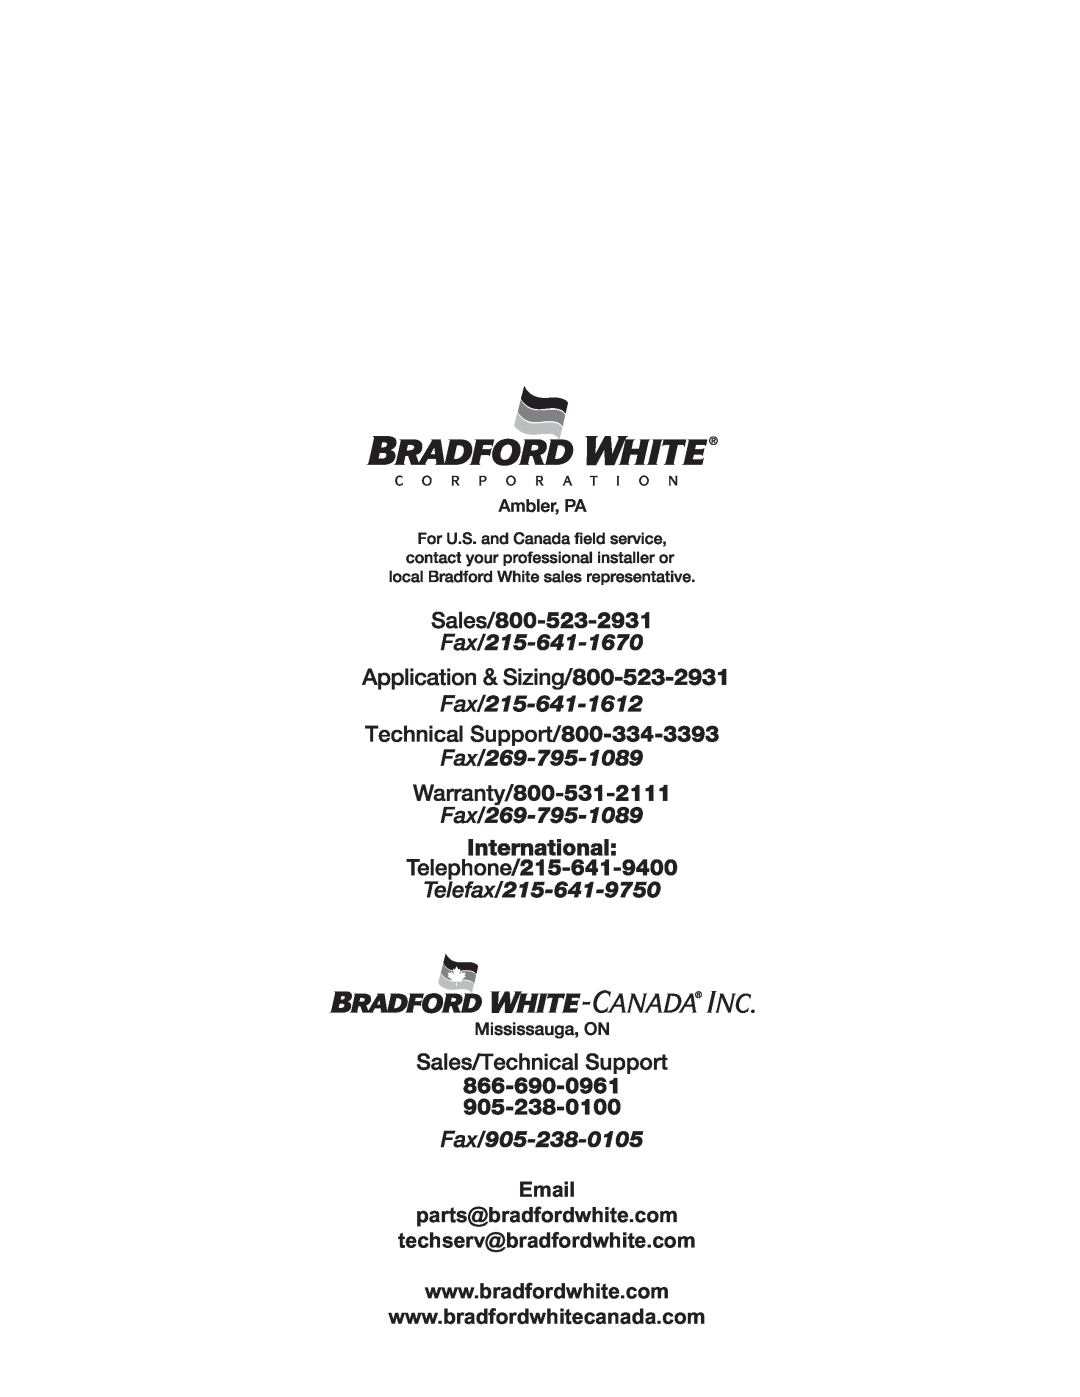 Bradford-White Corp MI60T, CX) Email parts@bradfordwhite.com techserv@bradfordwhite.com, Application & Sizing/800-523-2931 